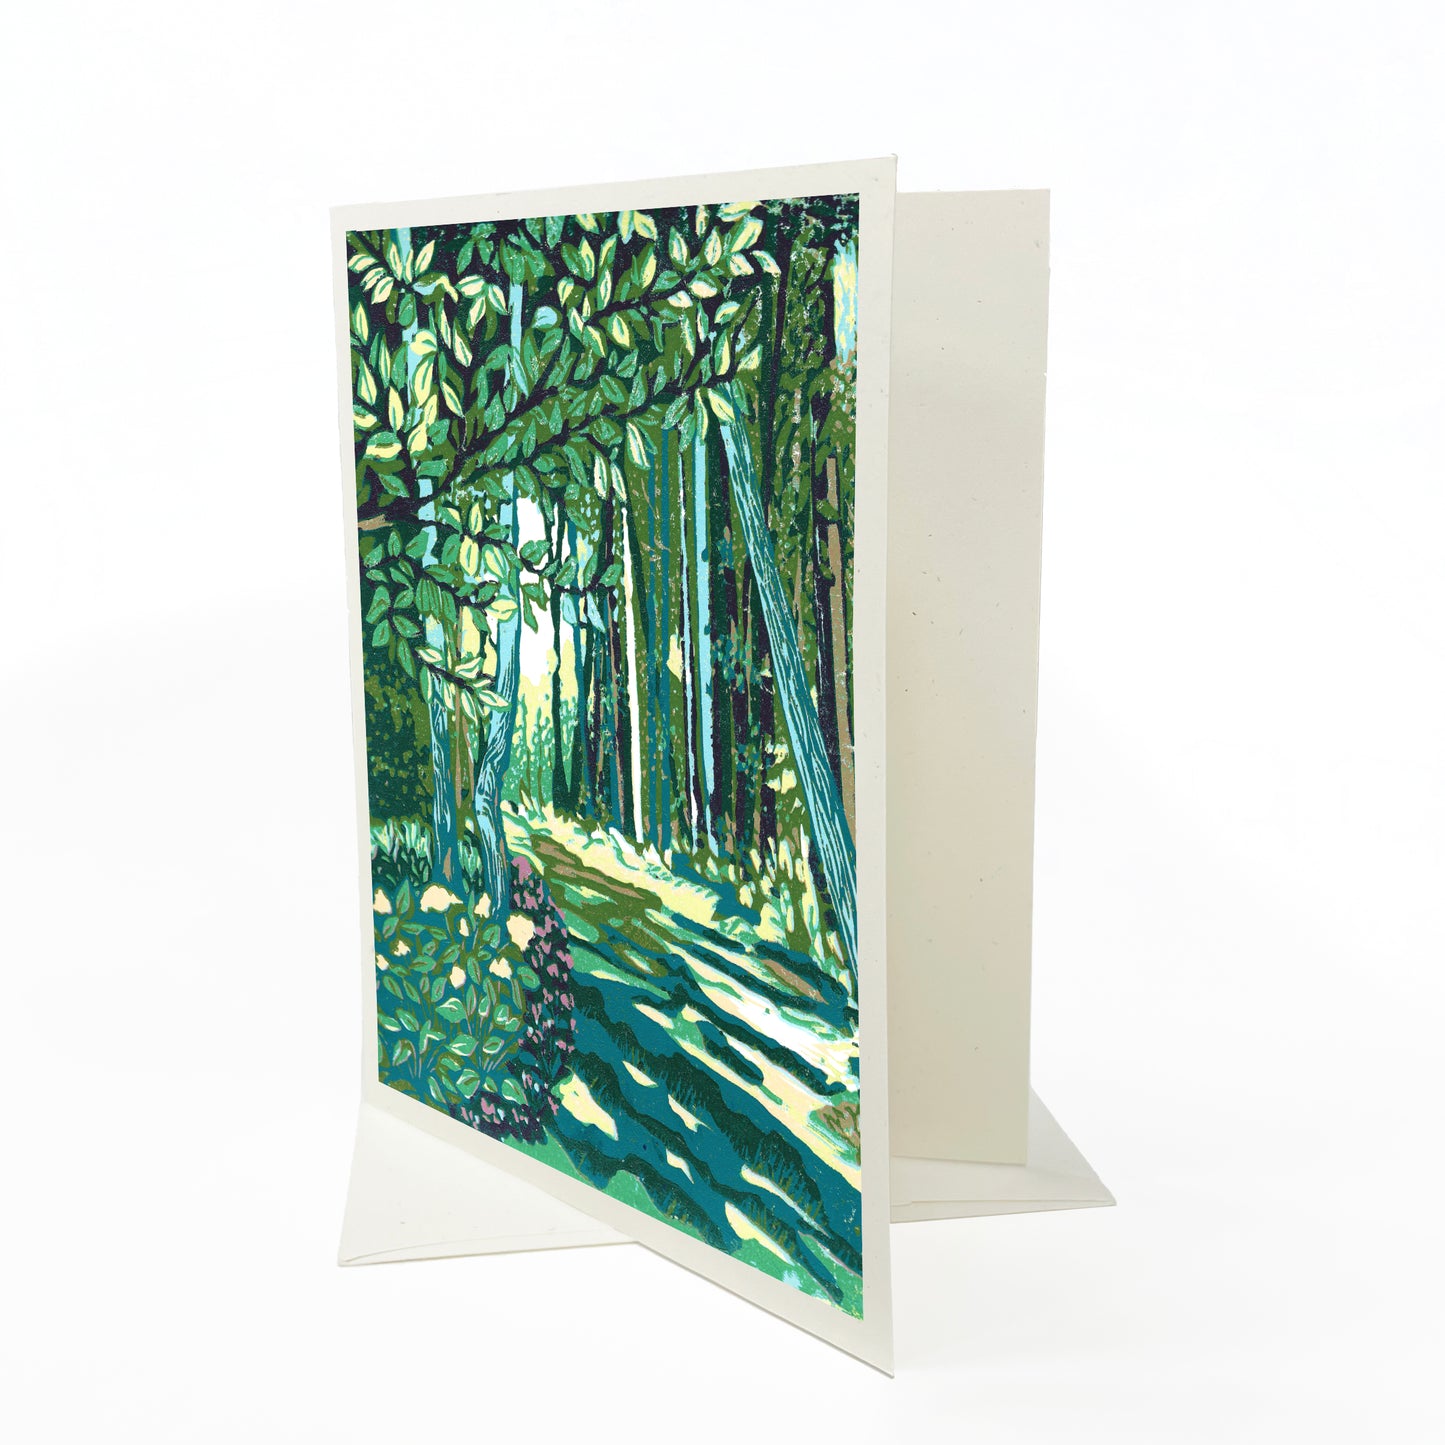 Cedar Trail Greeting Card, a block print design by Natalia Wohletz of Peninsula Prints.